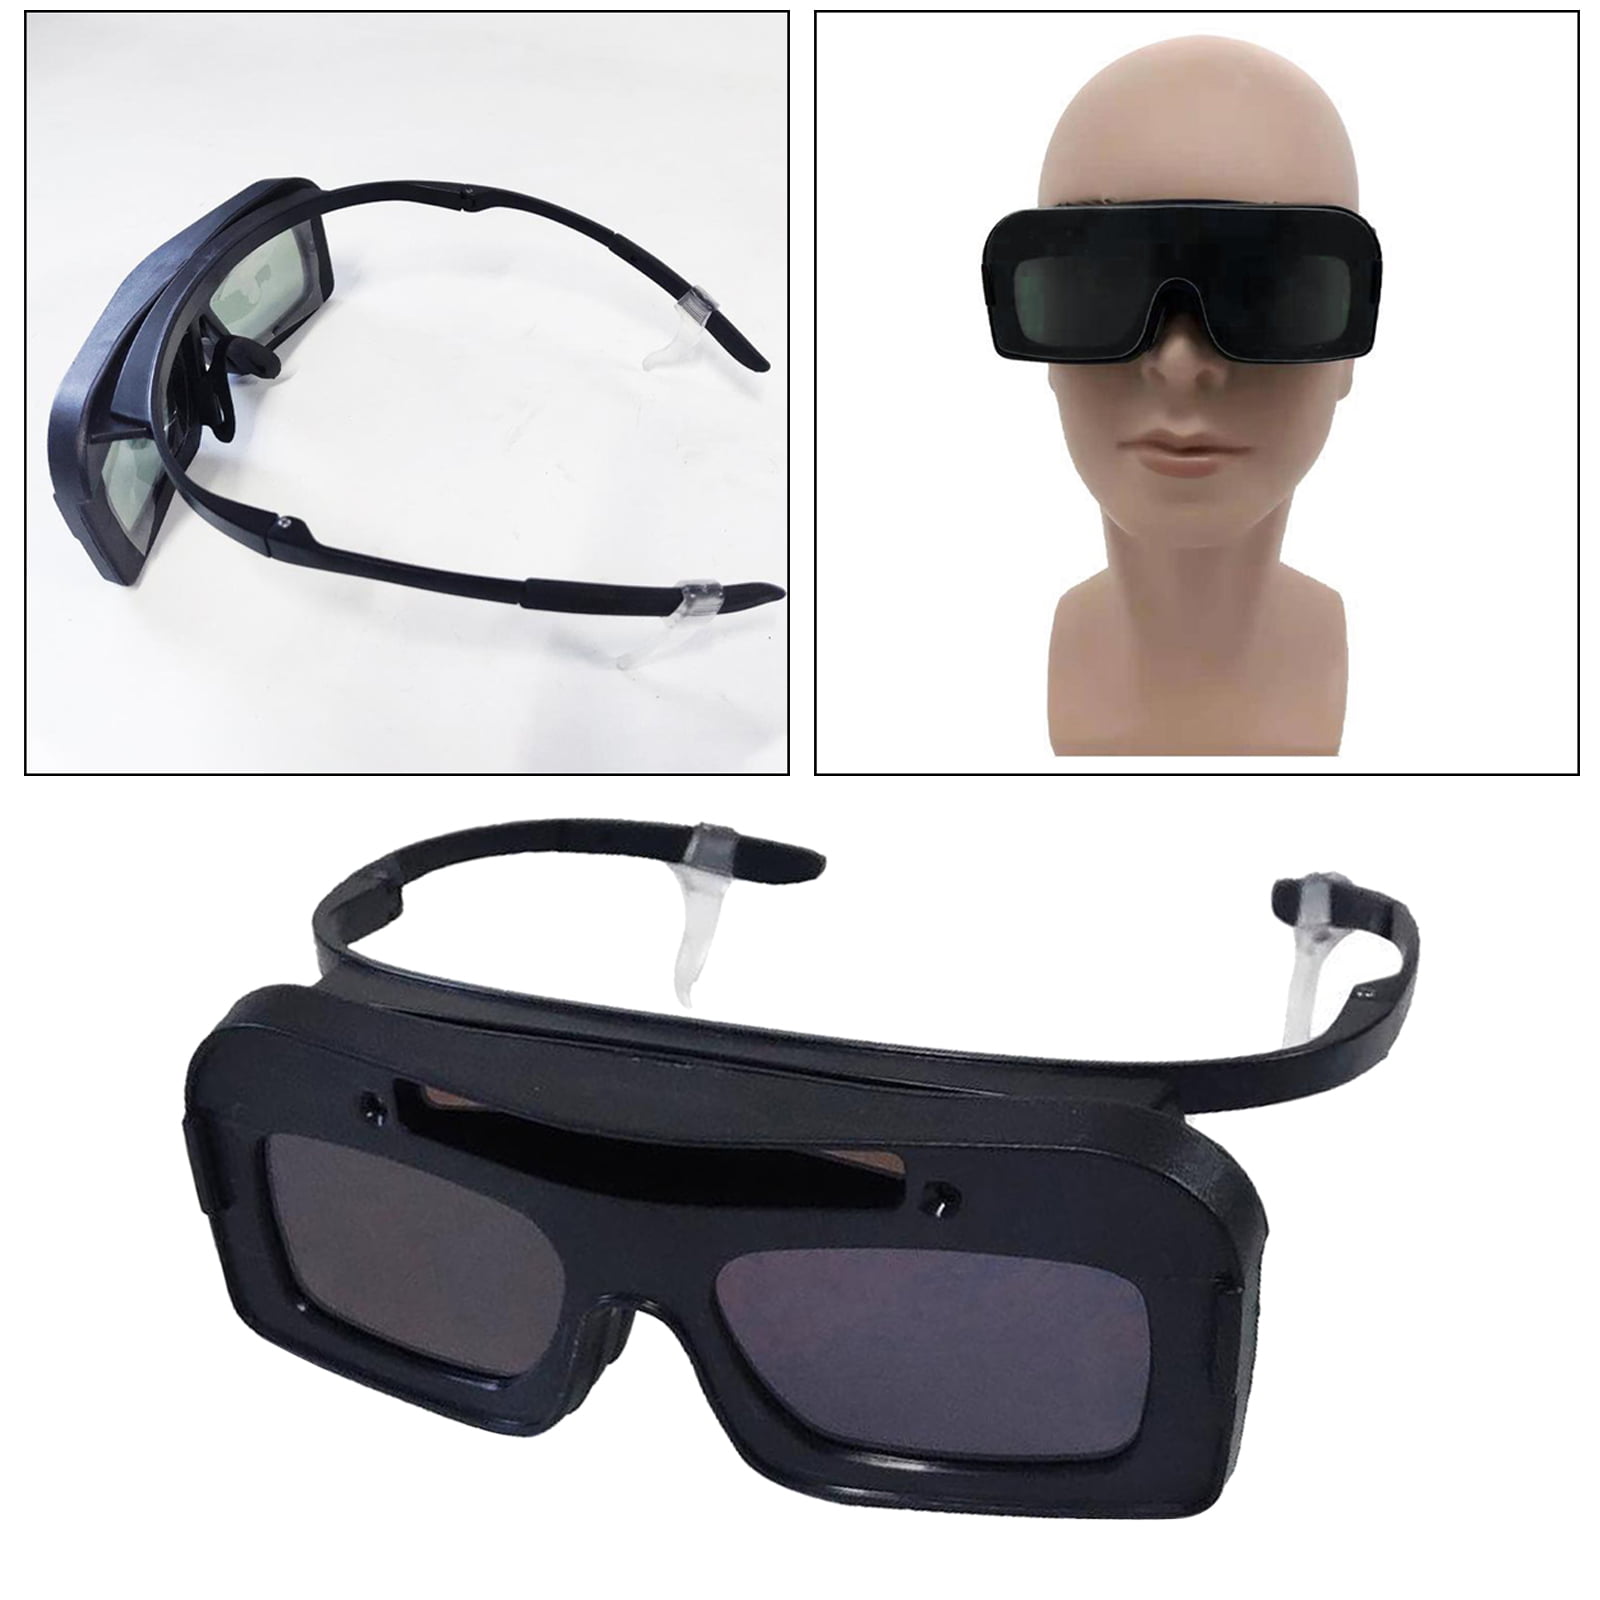 Hanime Fashion UV Protection Glasses Travel Goggles Outdoor Metal Frame Sunglasses Sunglasses 